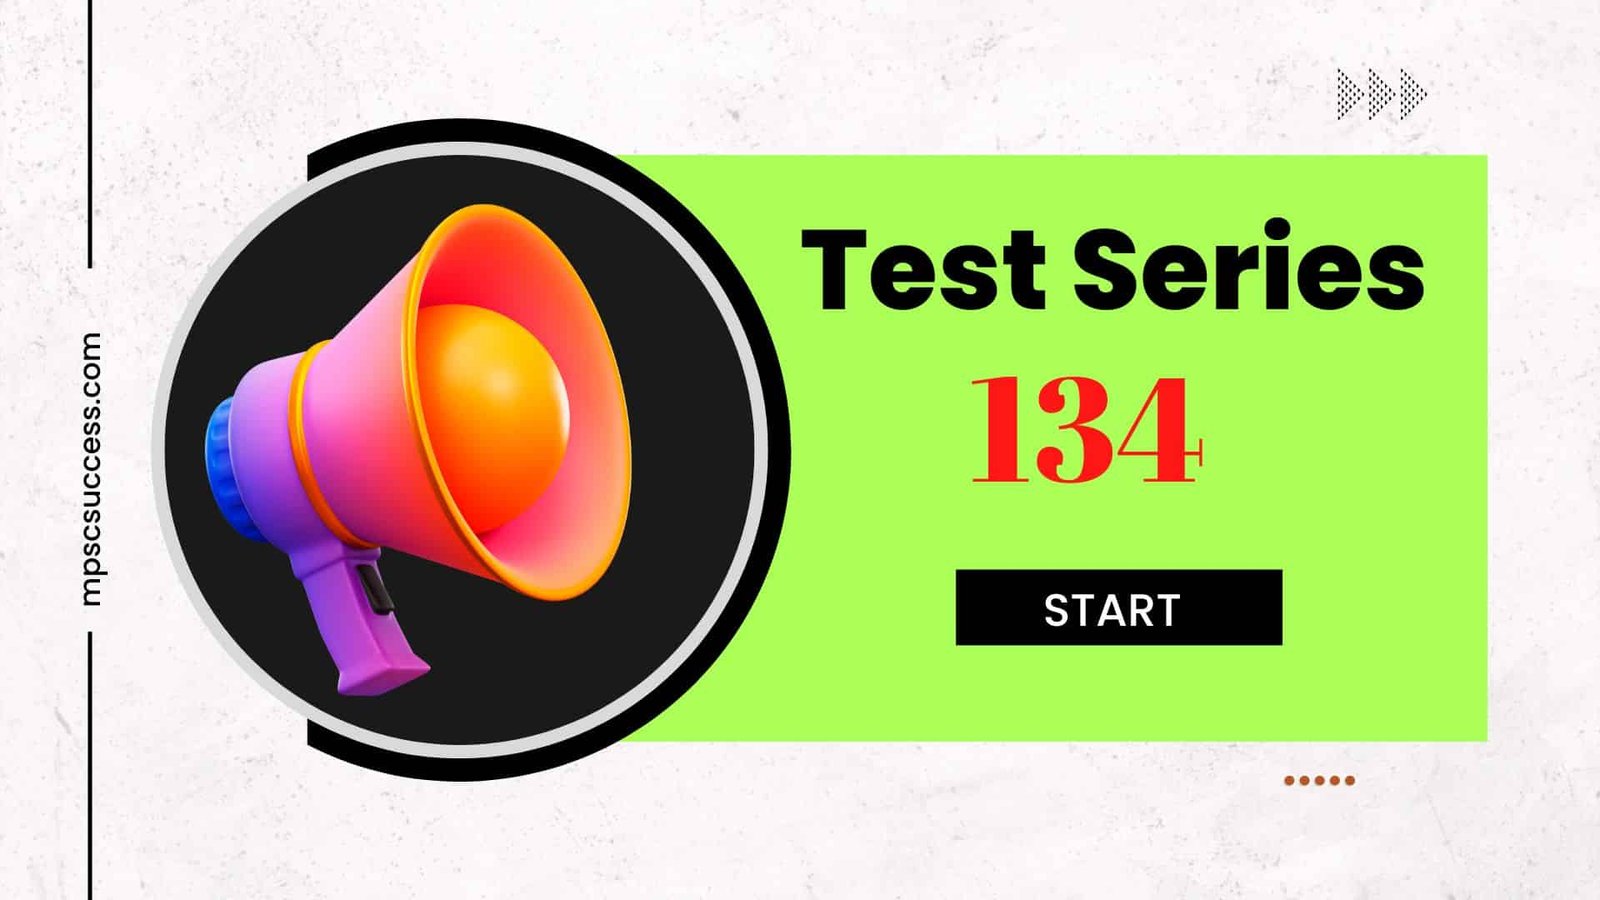 Test Series 134